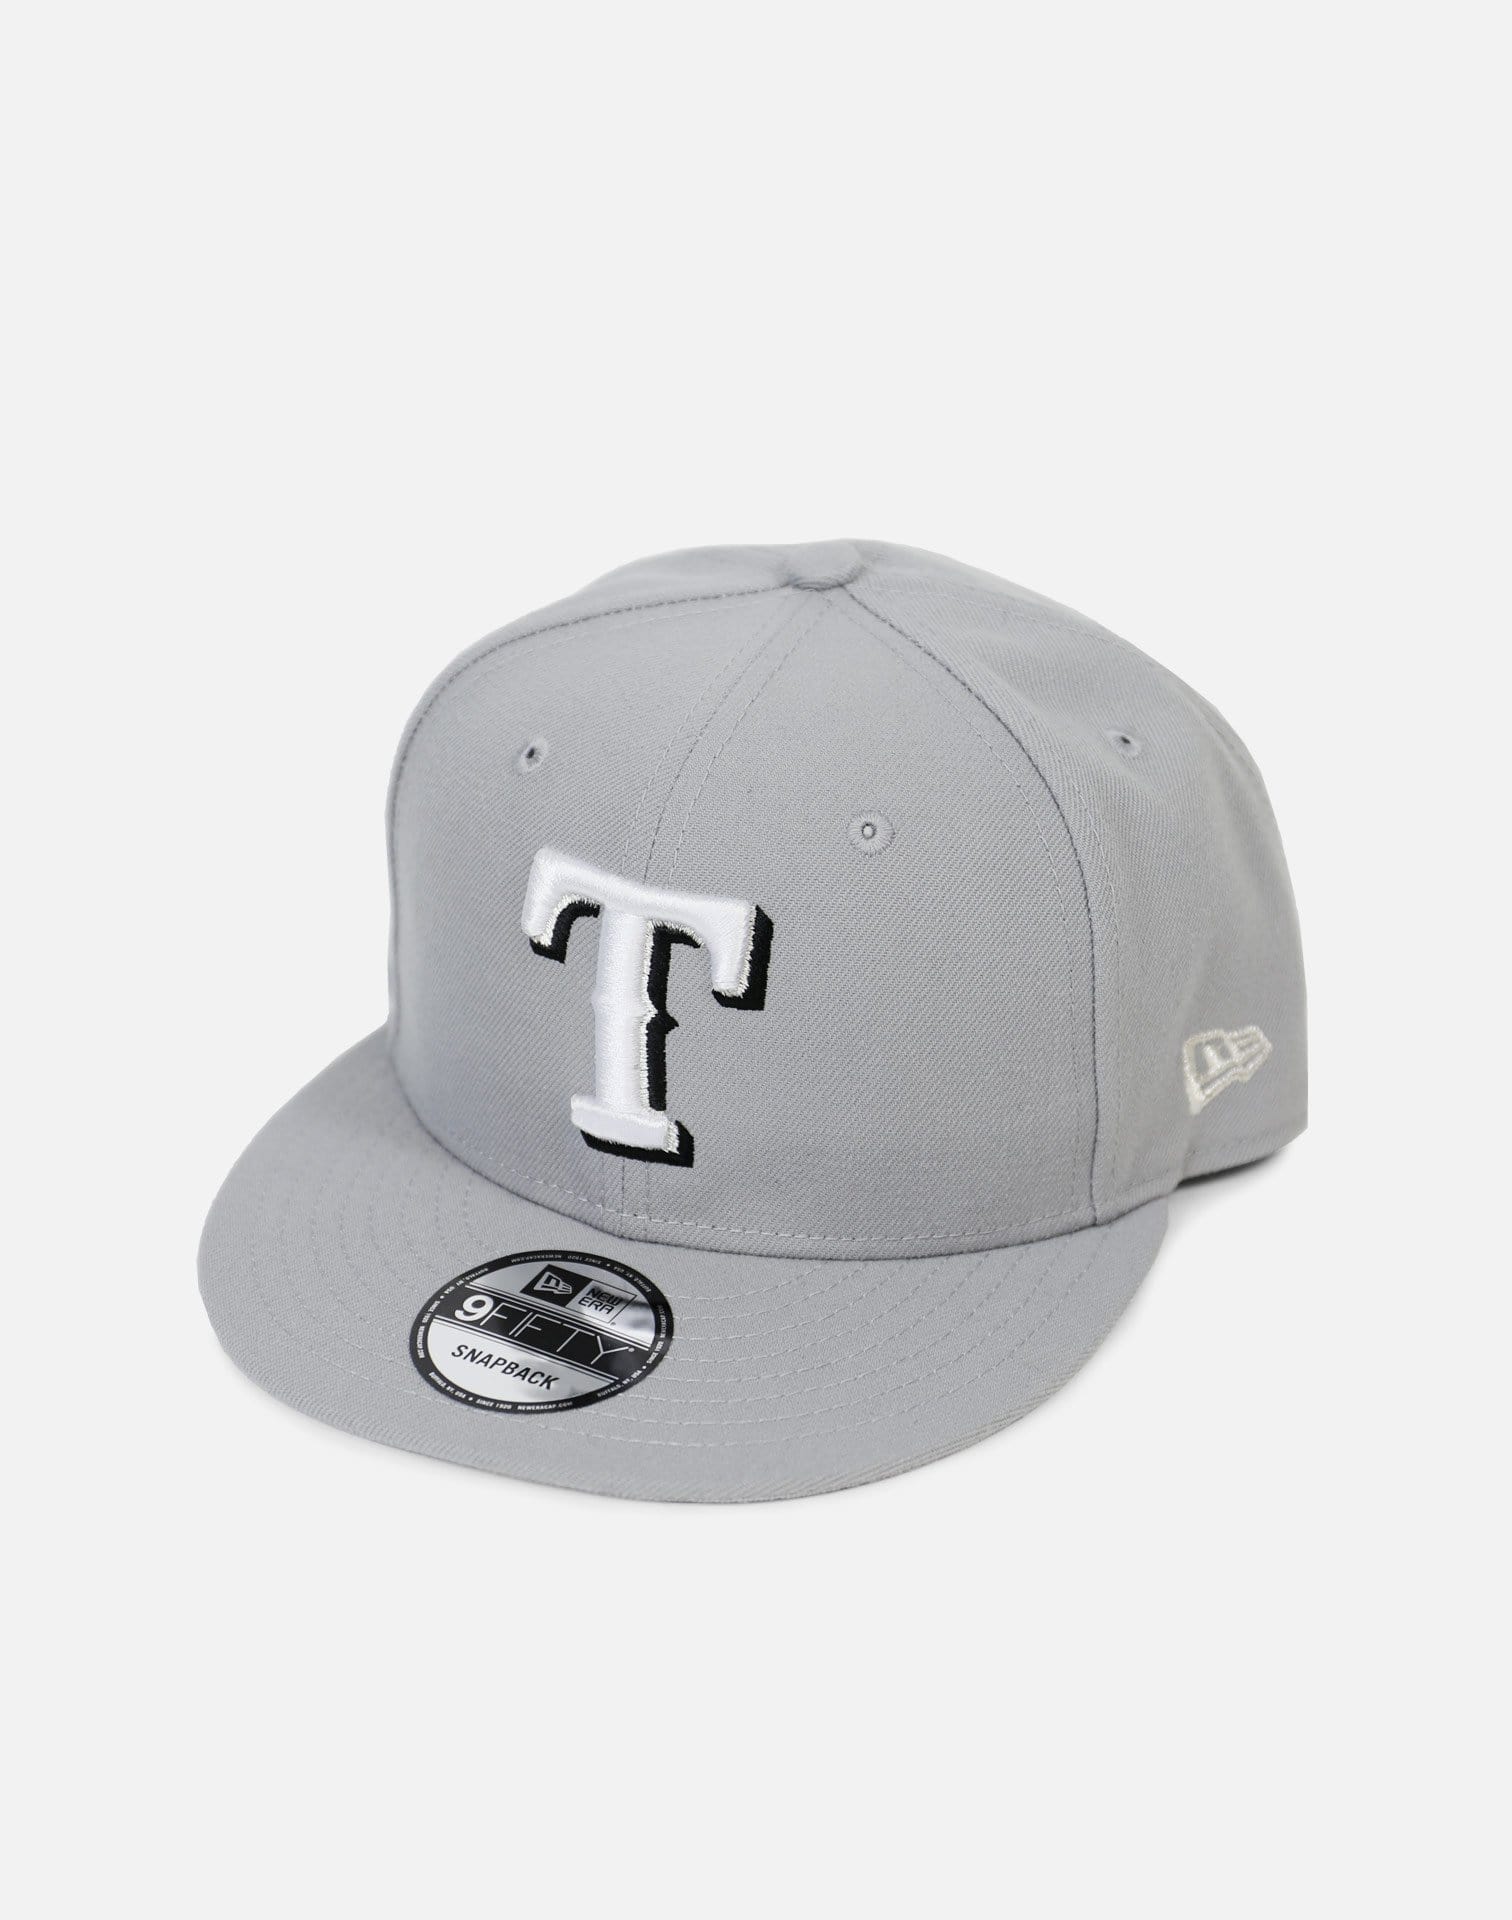 Texas Rangers Hats, Rangers Gear, Texas Rangers Pro Shop, Apparel